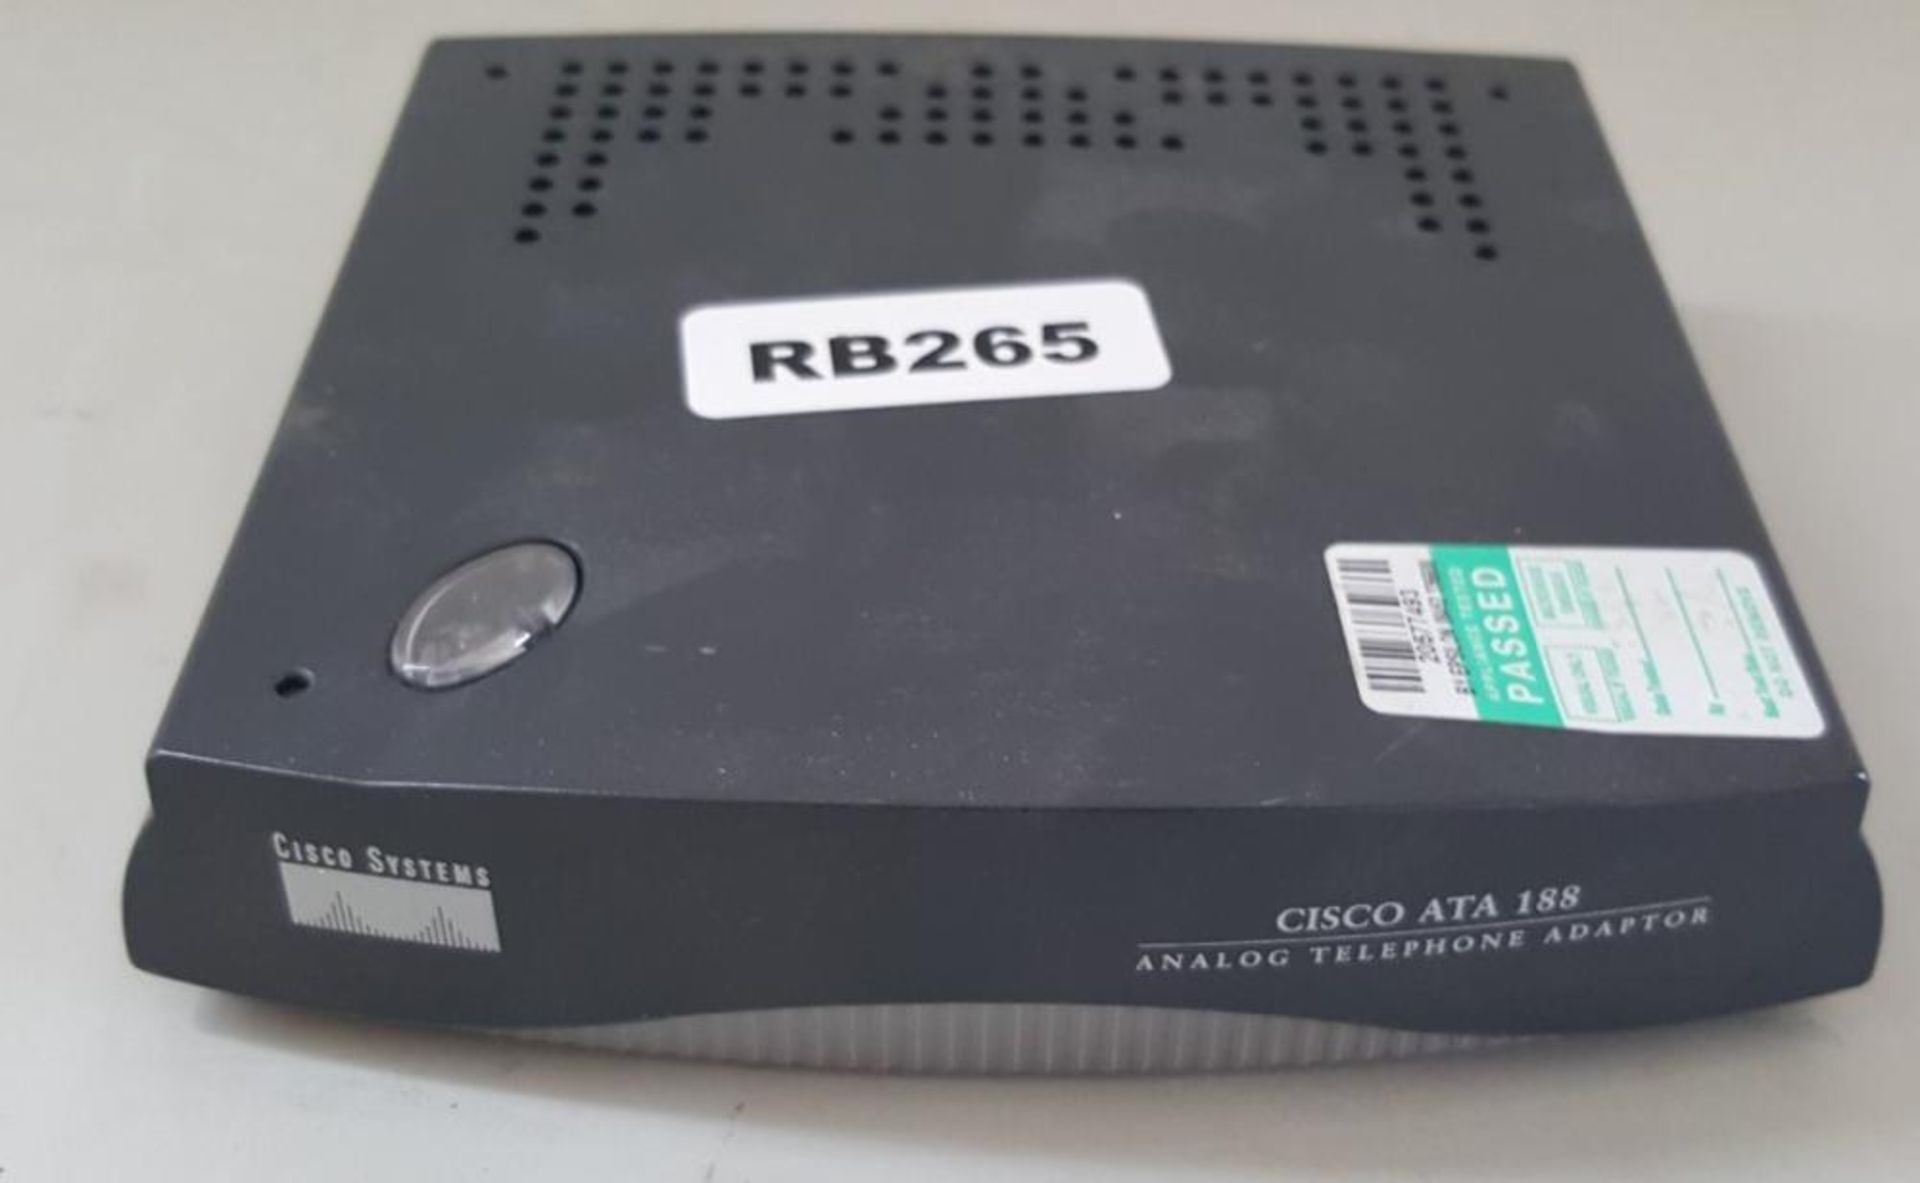 1 x Cisco ATA 188 Series Analog Telephone Adapter - Ref RB265 AA2 - CL394 - Location: Altrincham WA